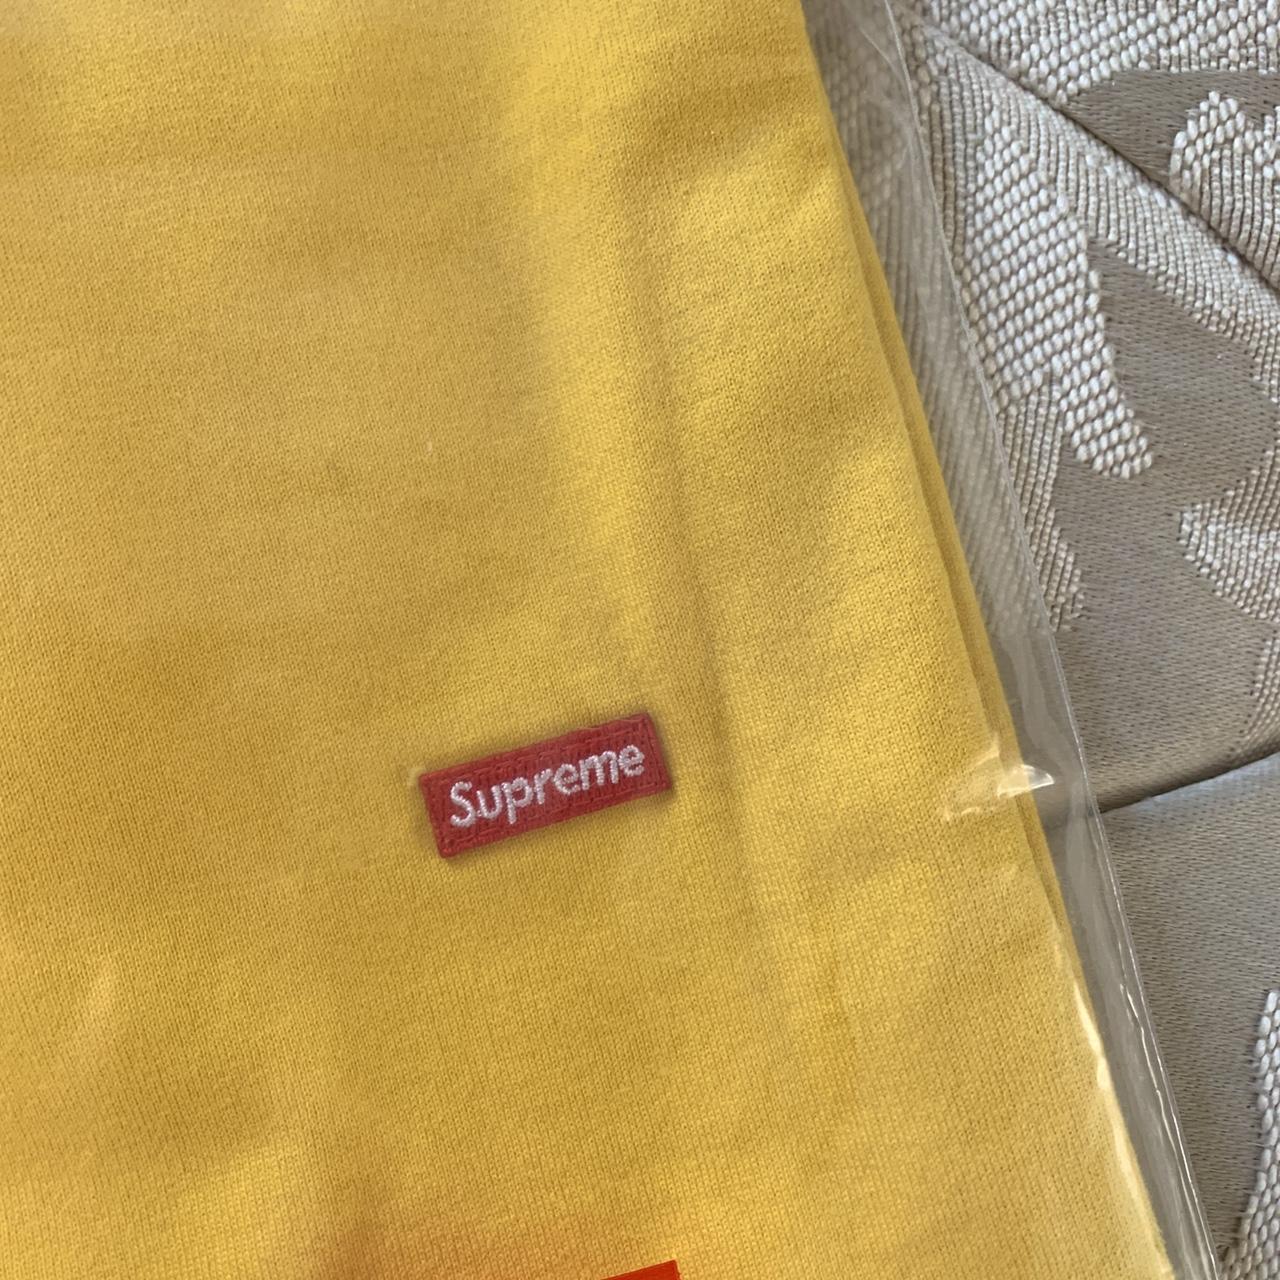 1999 Supreme Yellow Tonal Box Logo Tee